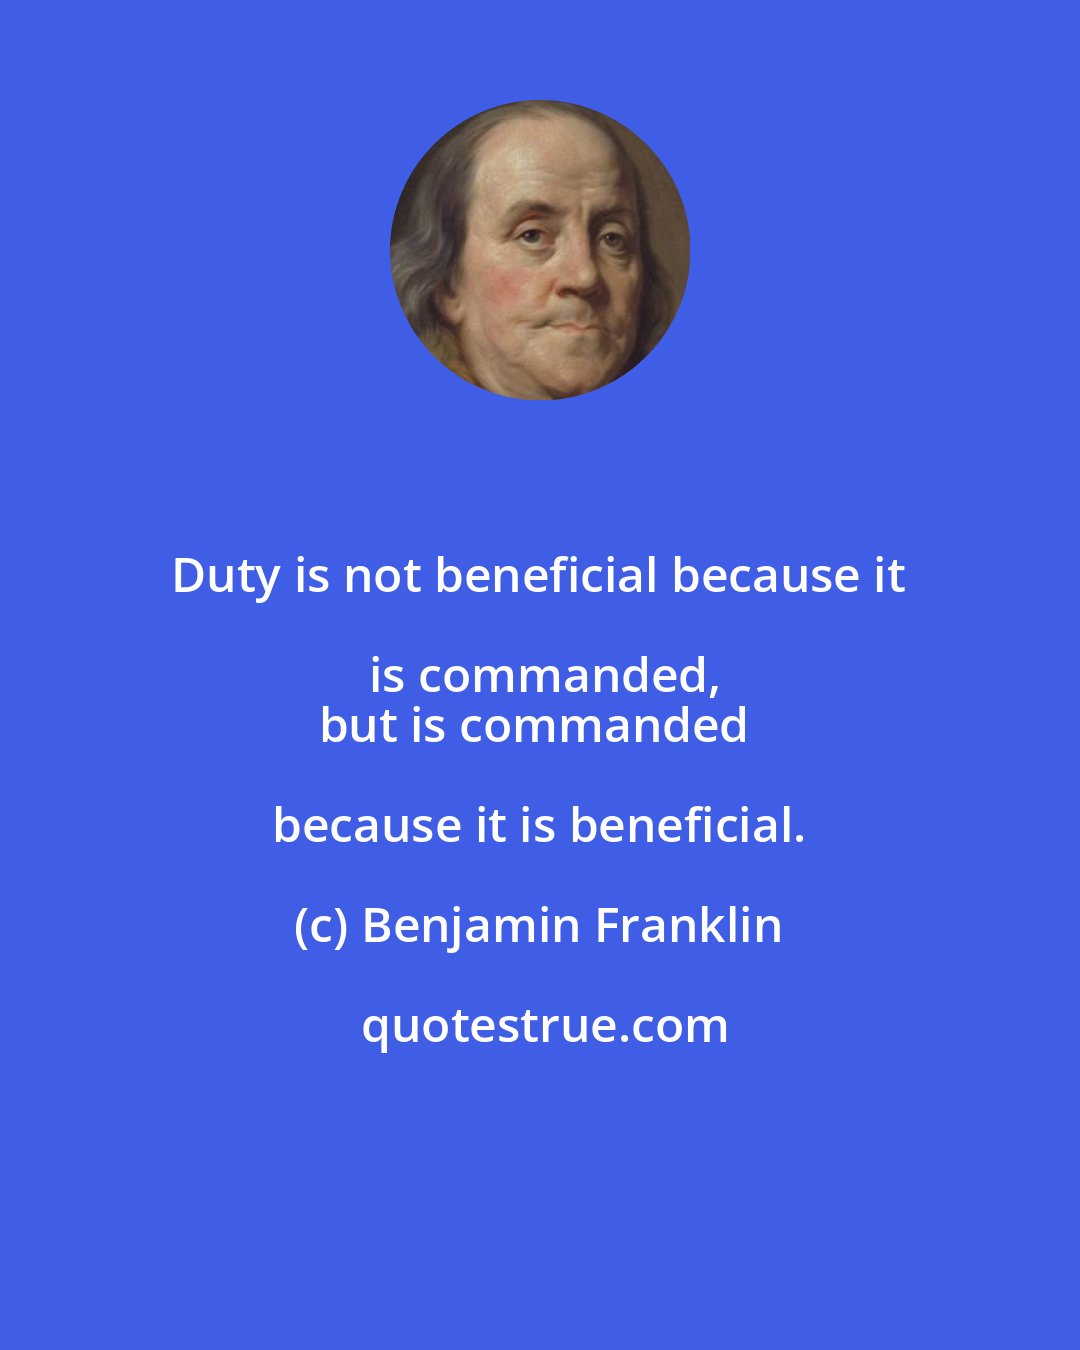 Benjamin Franklin: Duty is not beneficial because it is commanded,
but is commanded because it is beneficial.